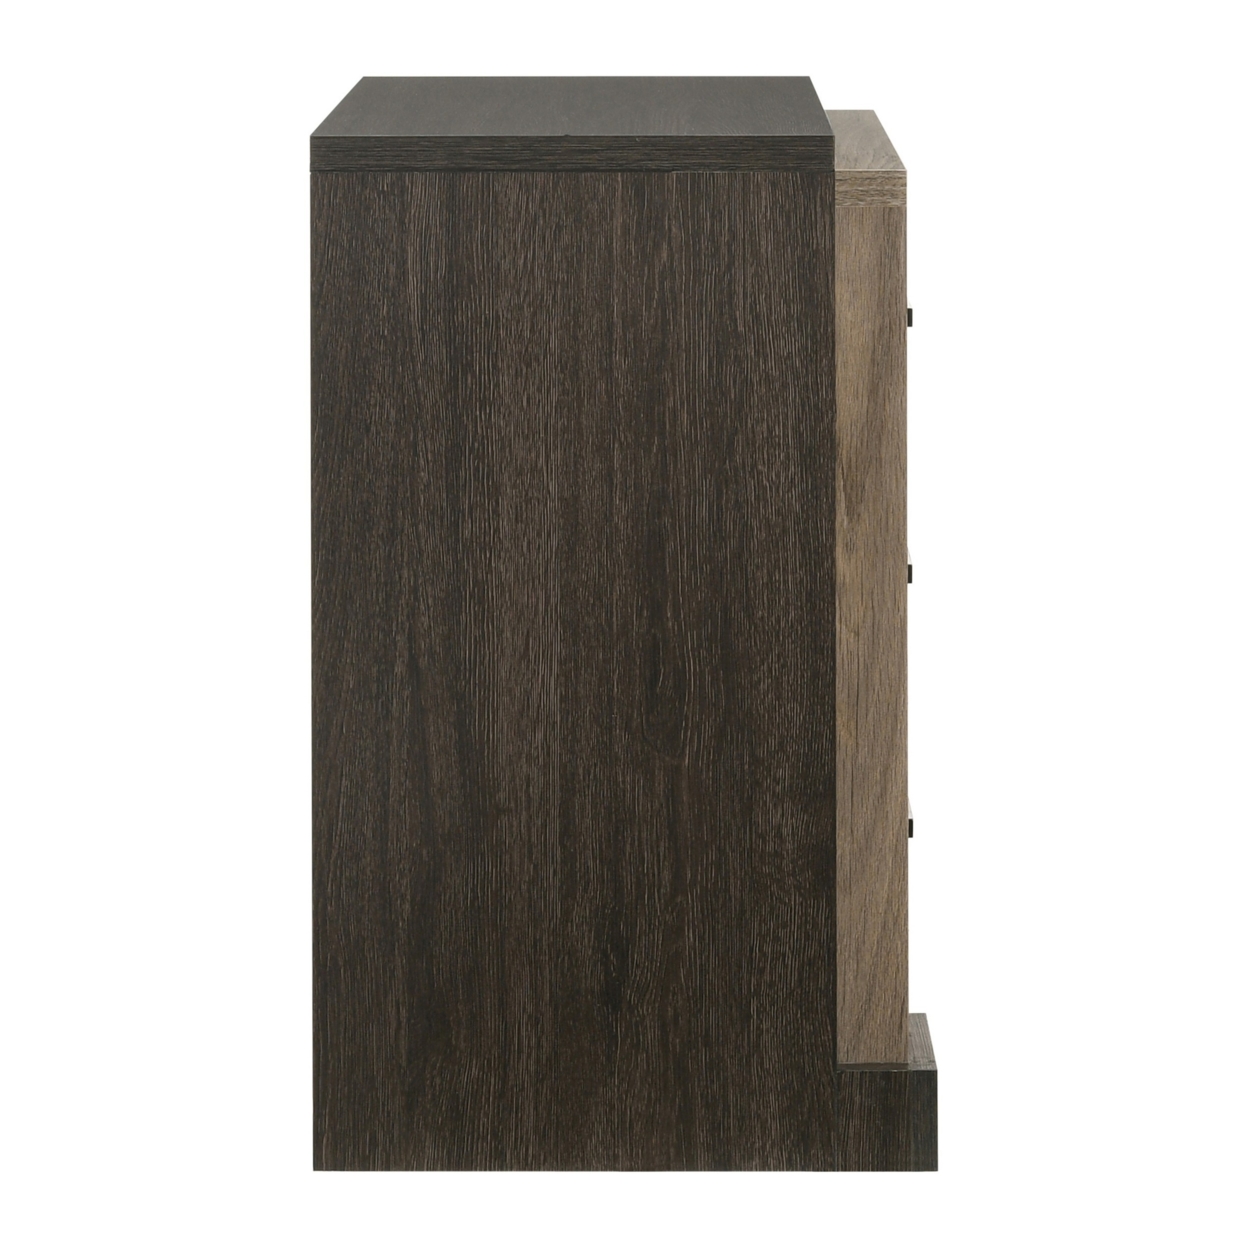 Qiz 30 Inch 3 Drawer Rustic Nightstand, Wood Grain Details, Dark Brown- Saltoro Sherpi